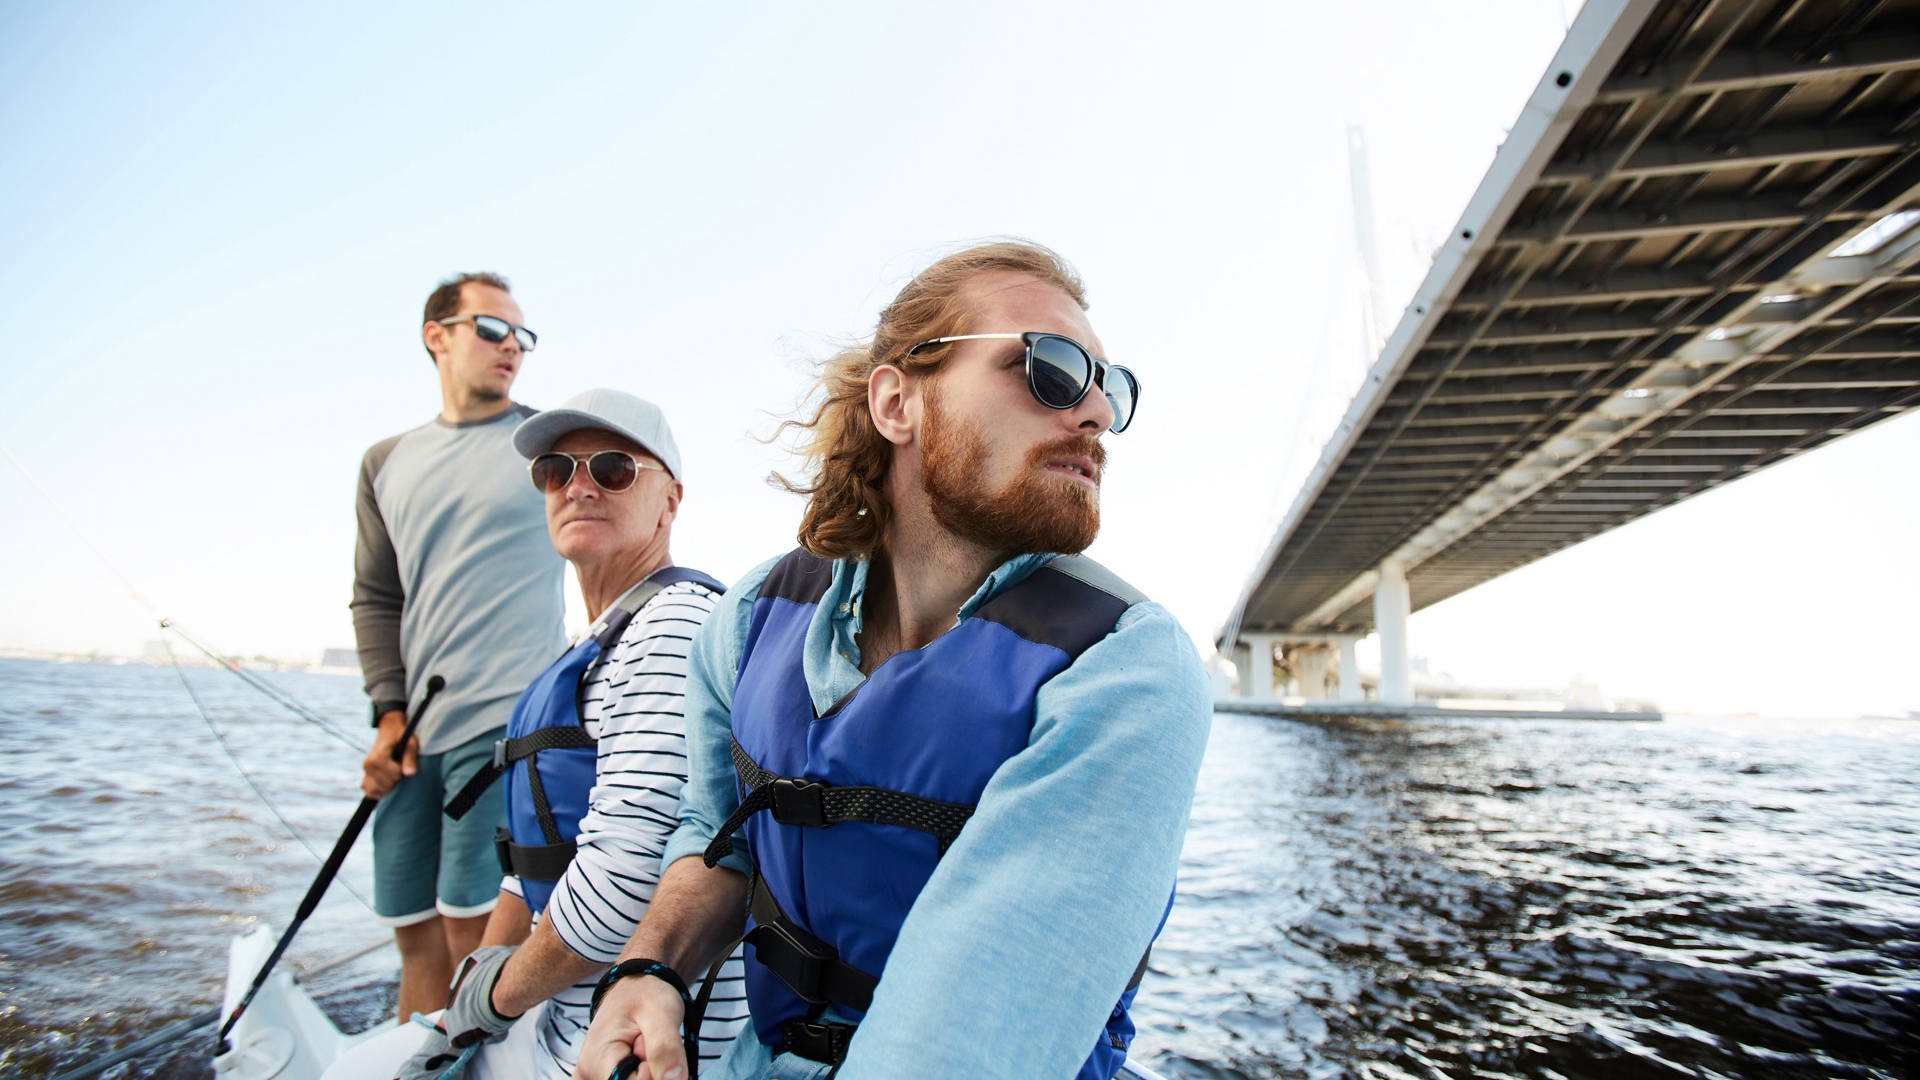 Men sailing yacht in sunglasses